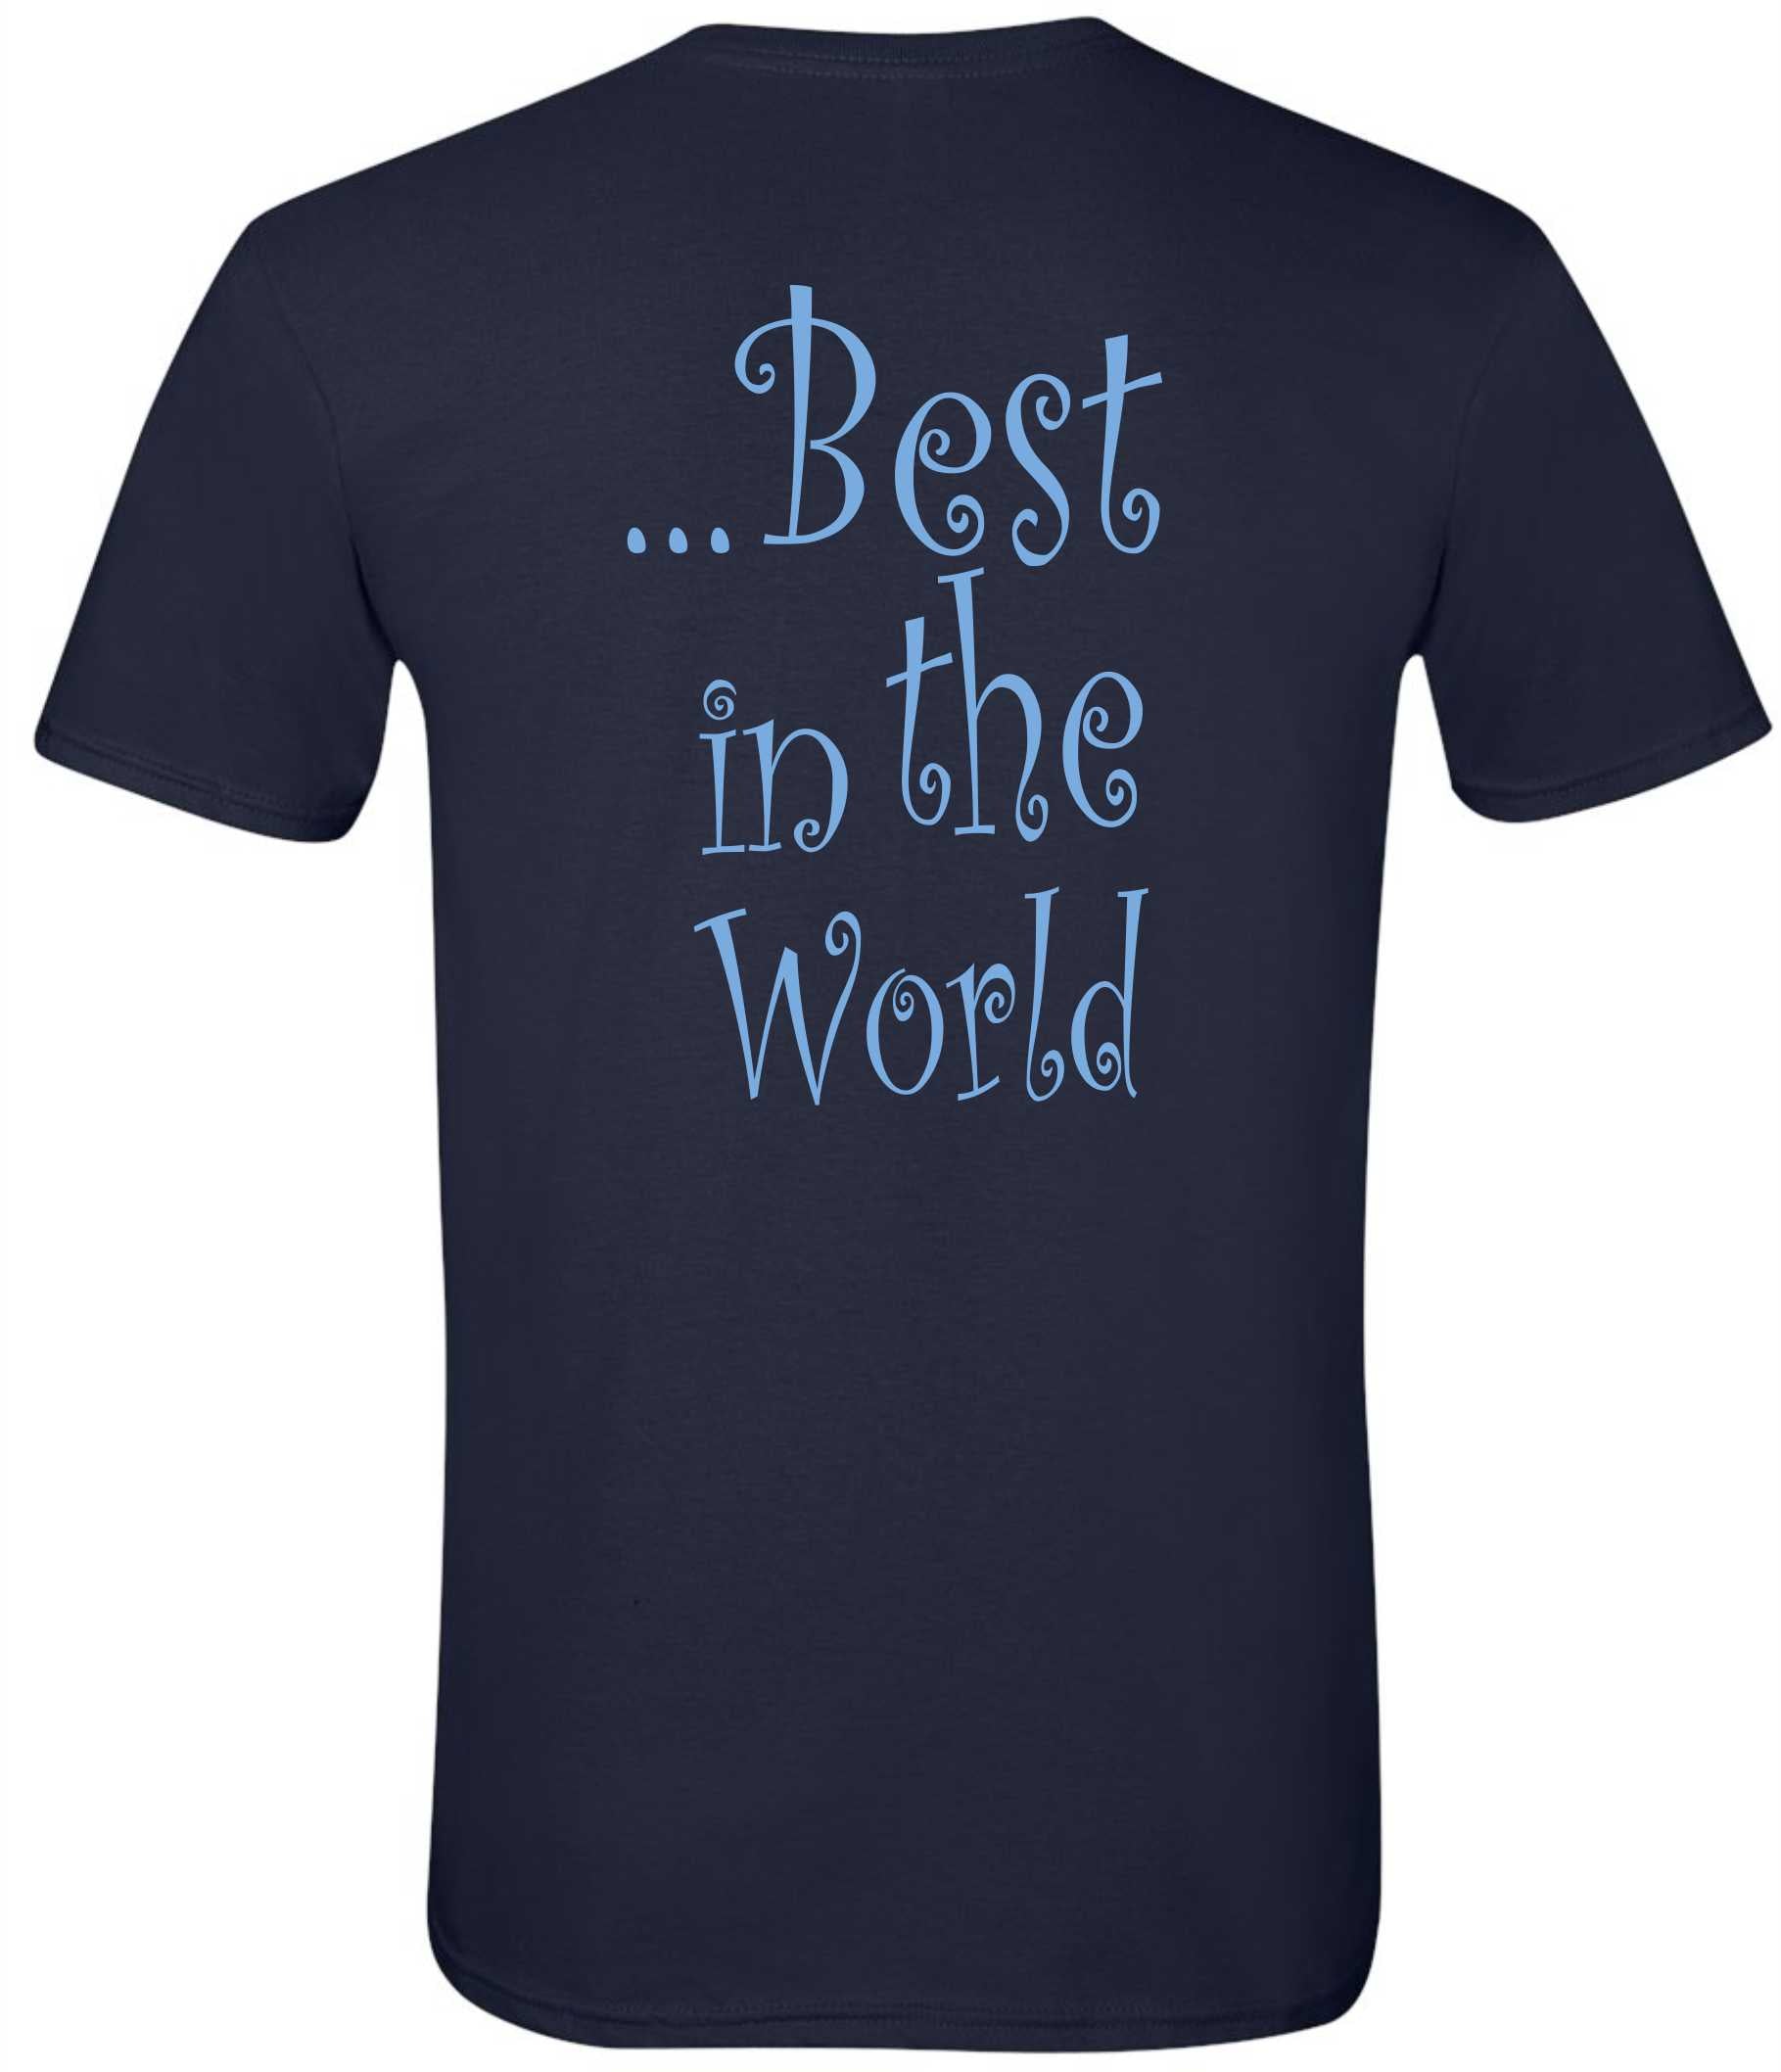 Carolina Girls Best in the World Statement T-shirt